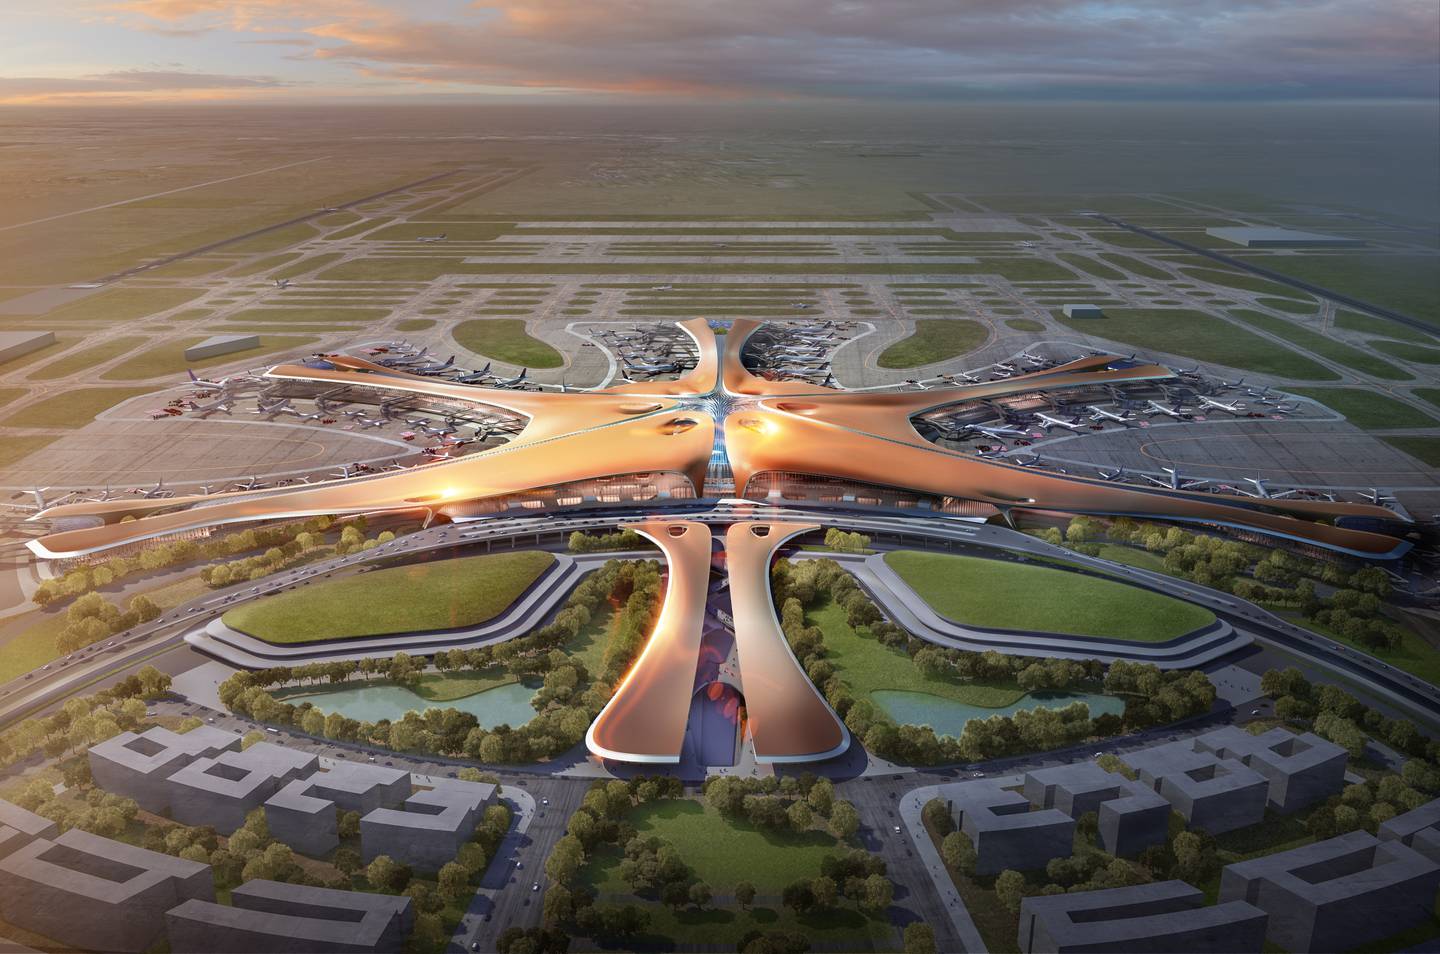 Beijing Daxing International Airport in China. Photo: Zaha Hadid Architects